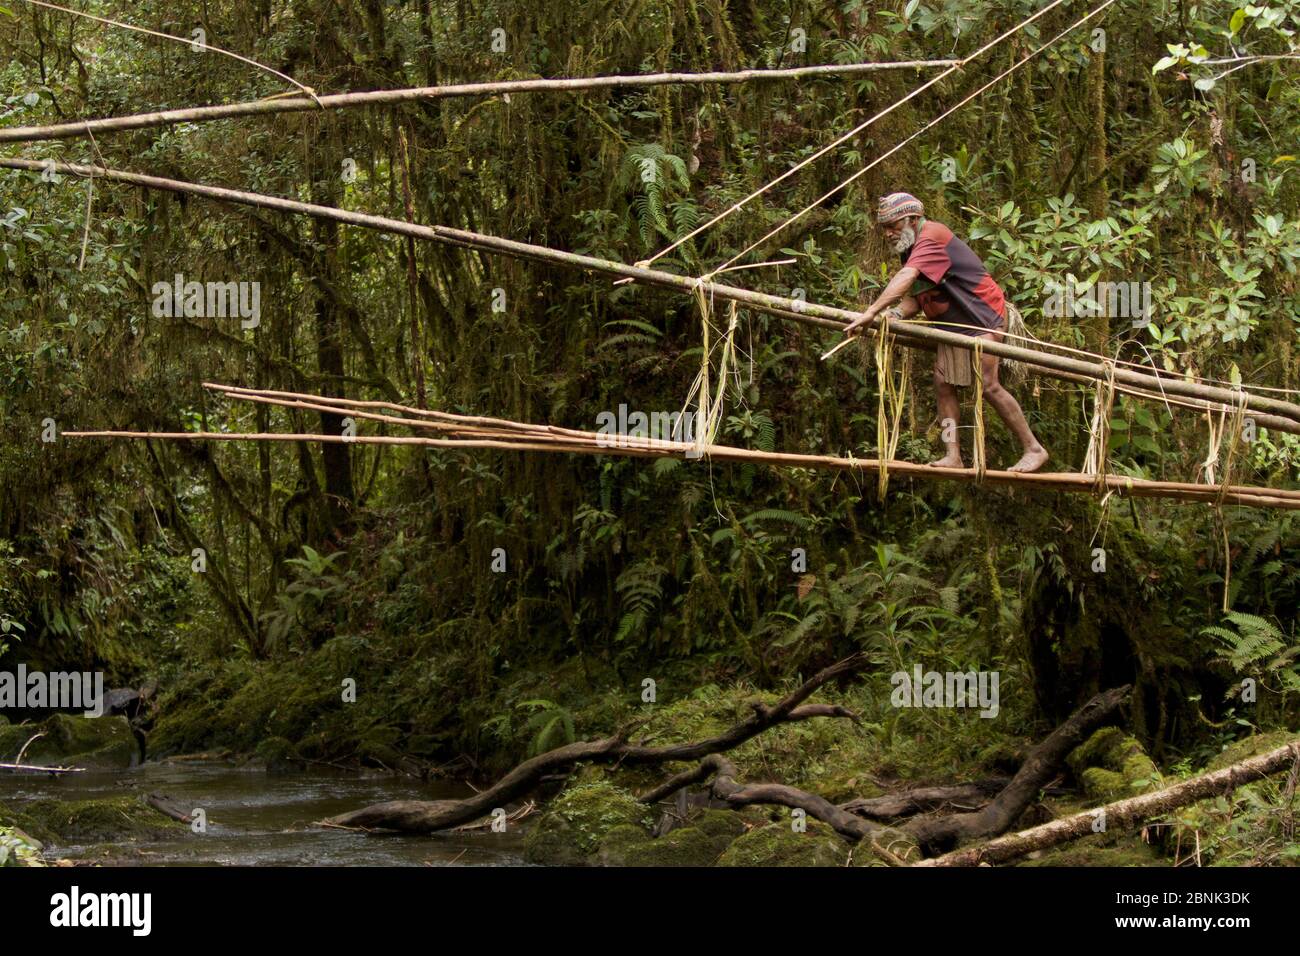 Huli elder constructing a traditional vine and pole suspension bridge over a stream, Papua New Guinea, November 2010. Stock Photo